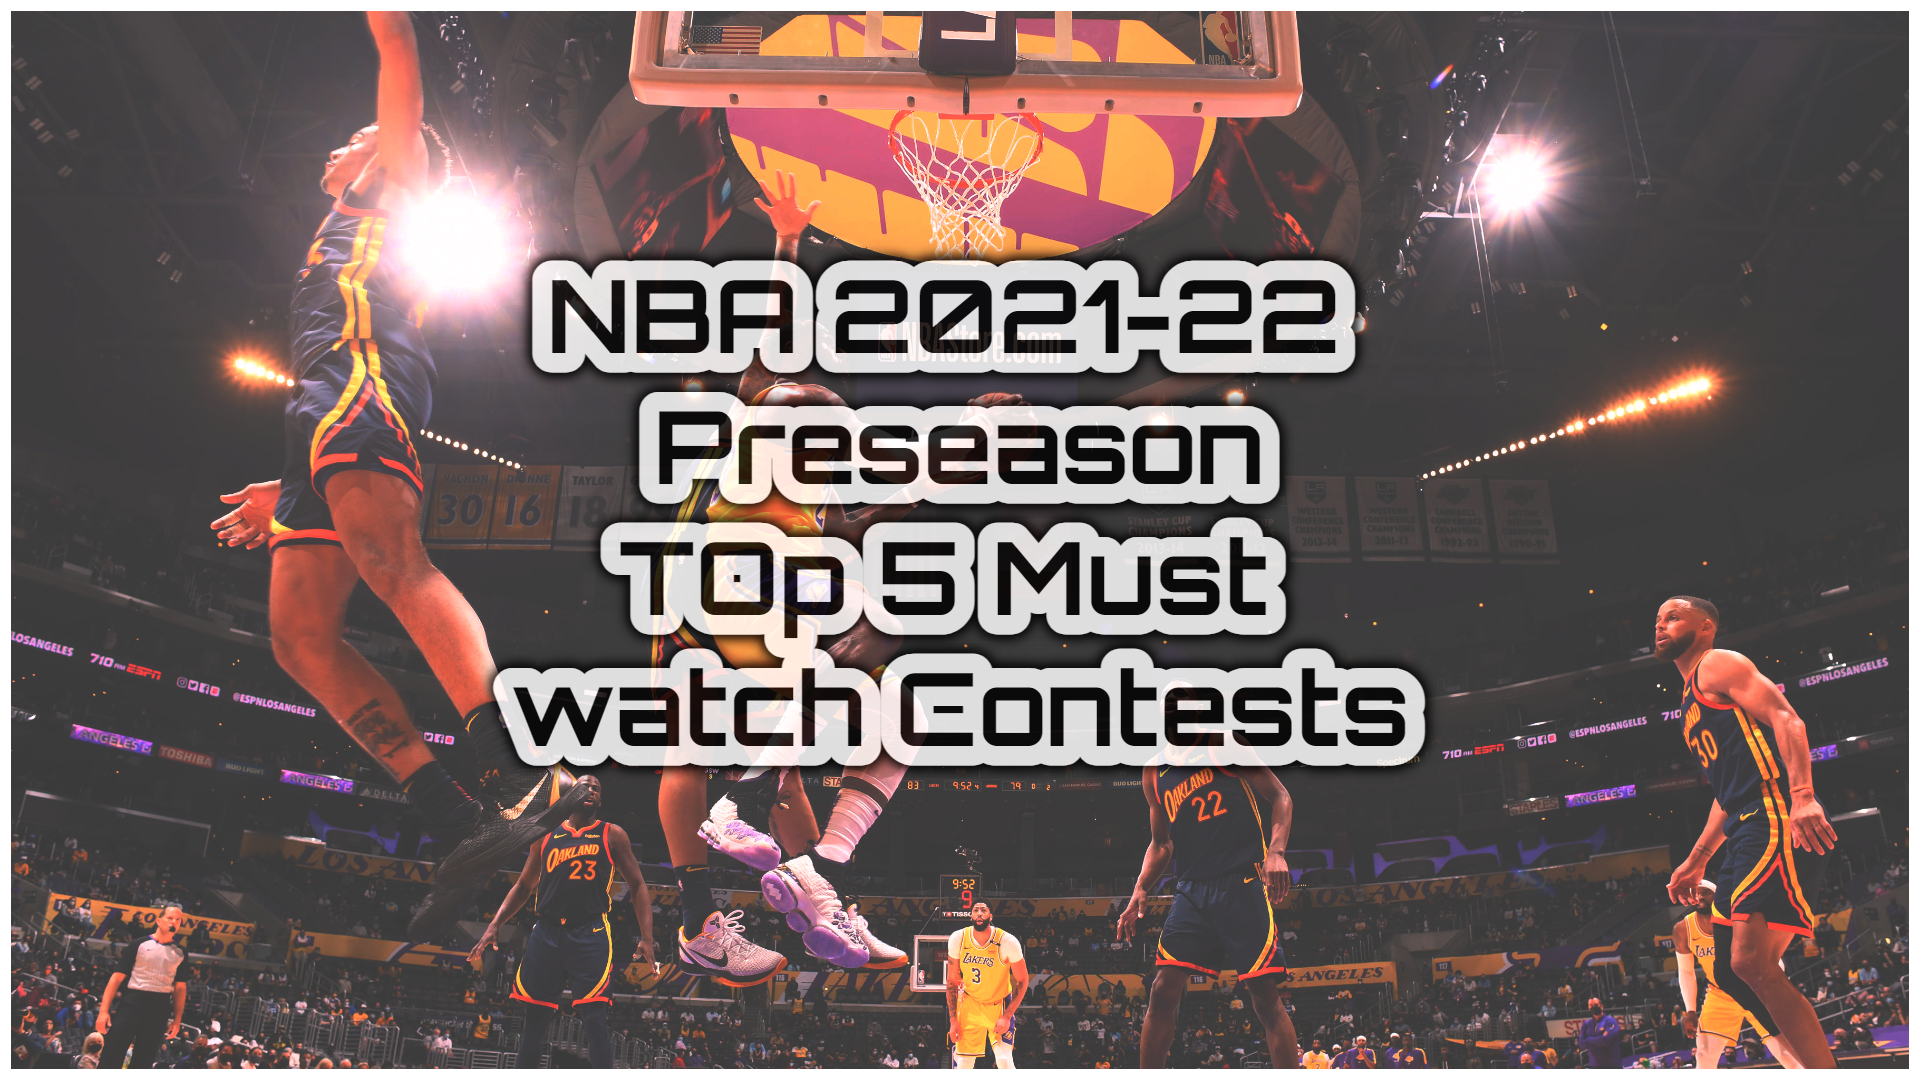 NBA 2021-22 Preseason TOp 5 Must watch Contests